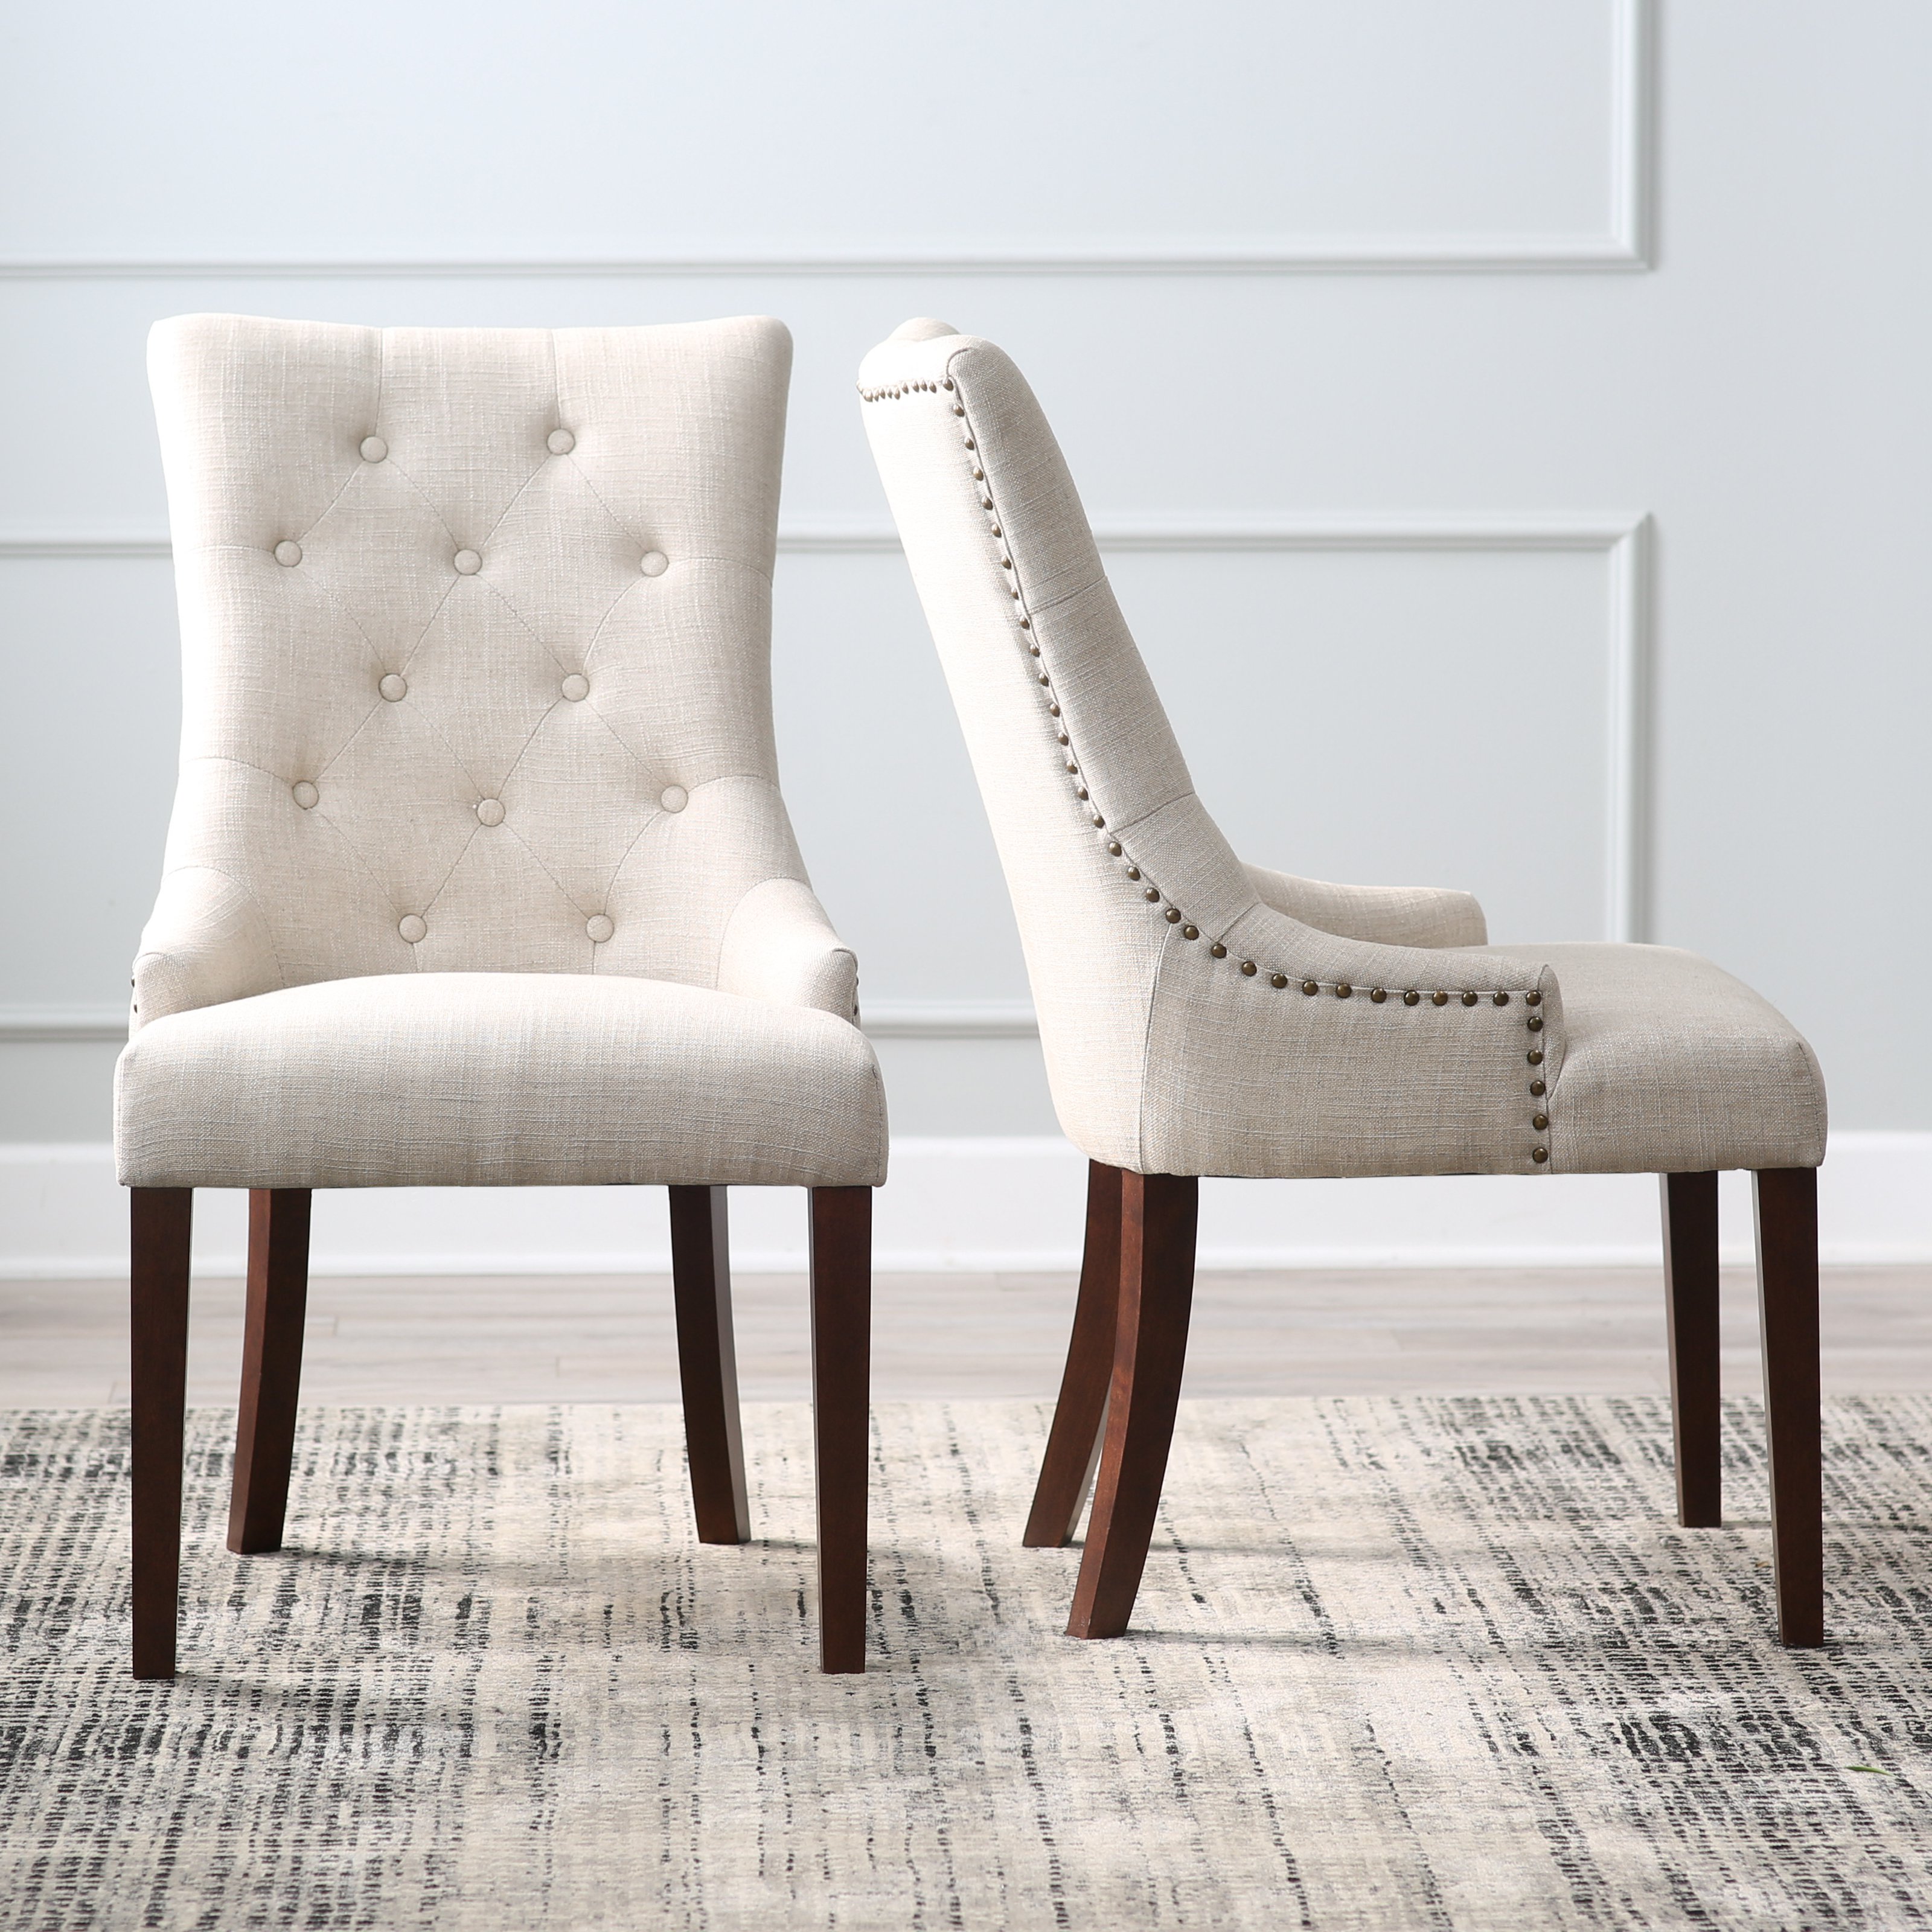 belham living thomas tufted tweed dining chairs - set of 2 | hayneedle REPOJEQ